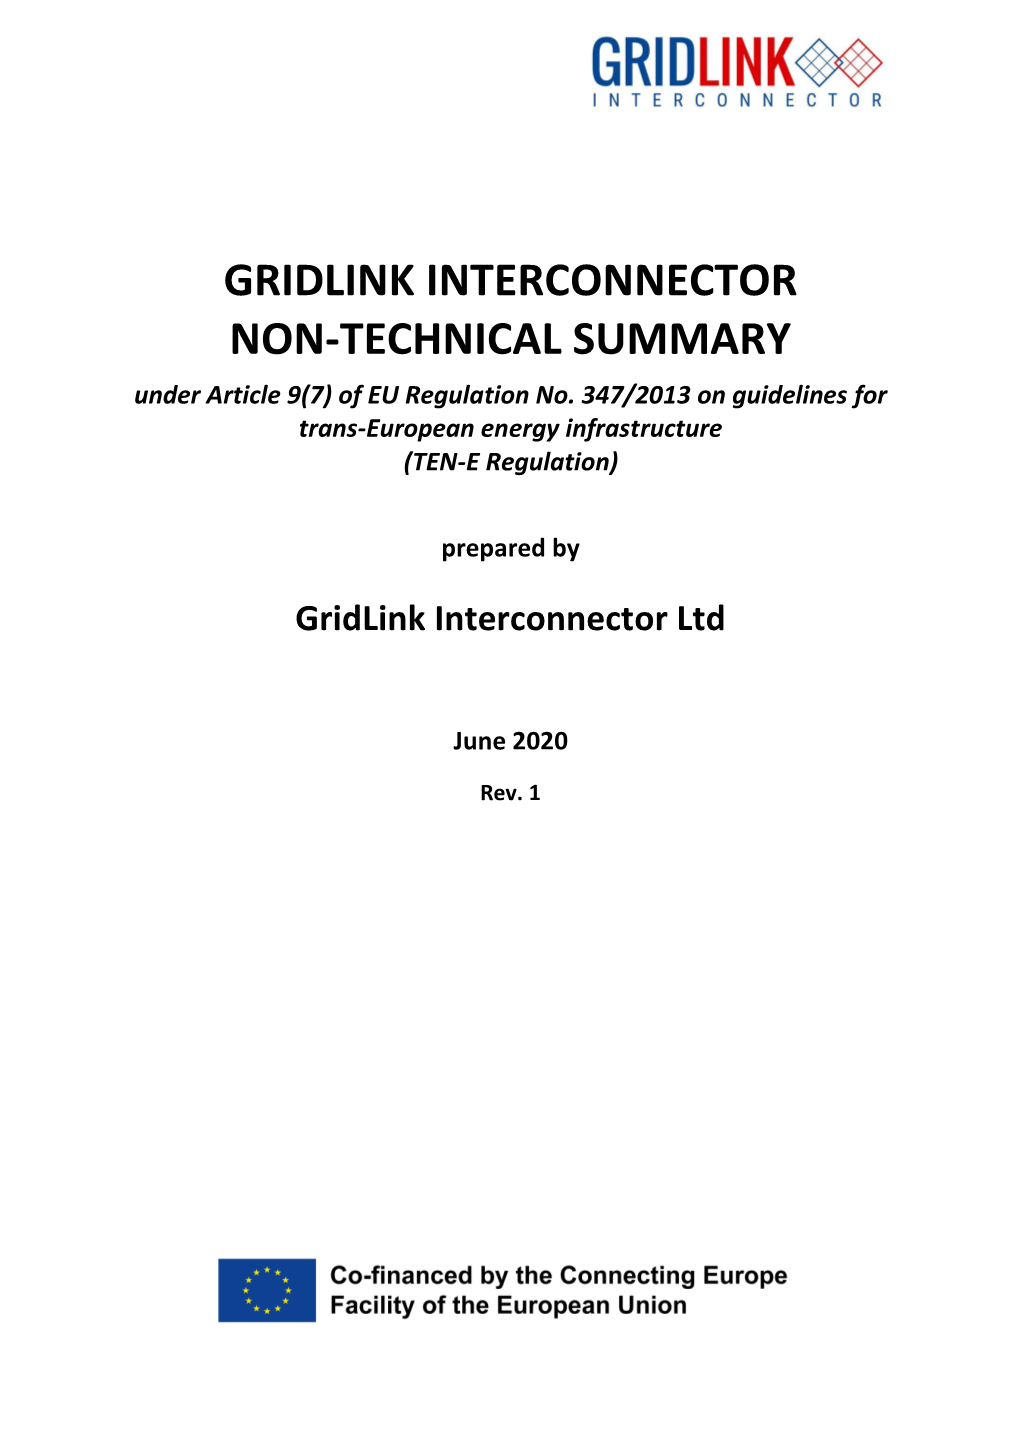 GRIDLINK INTERCONNECTOR NON-TECHNICAL SUMMARY Under Article 9(7) of EU Regulation No